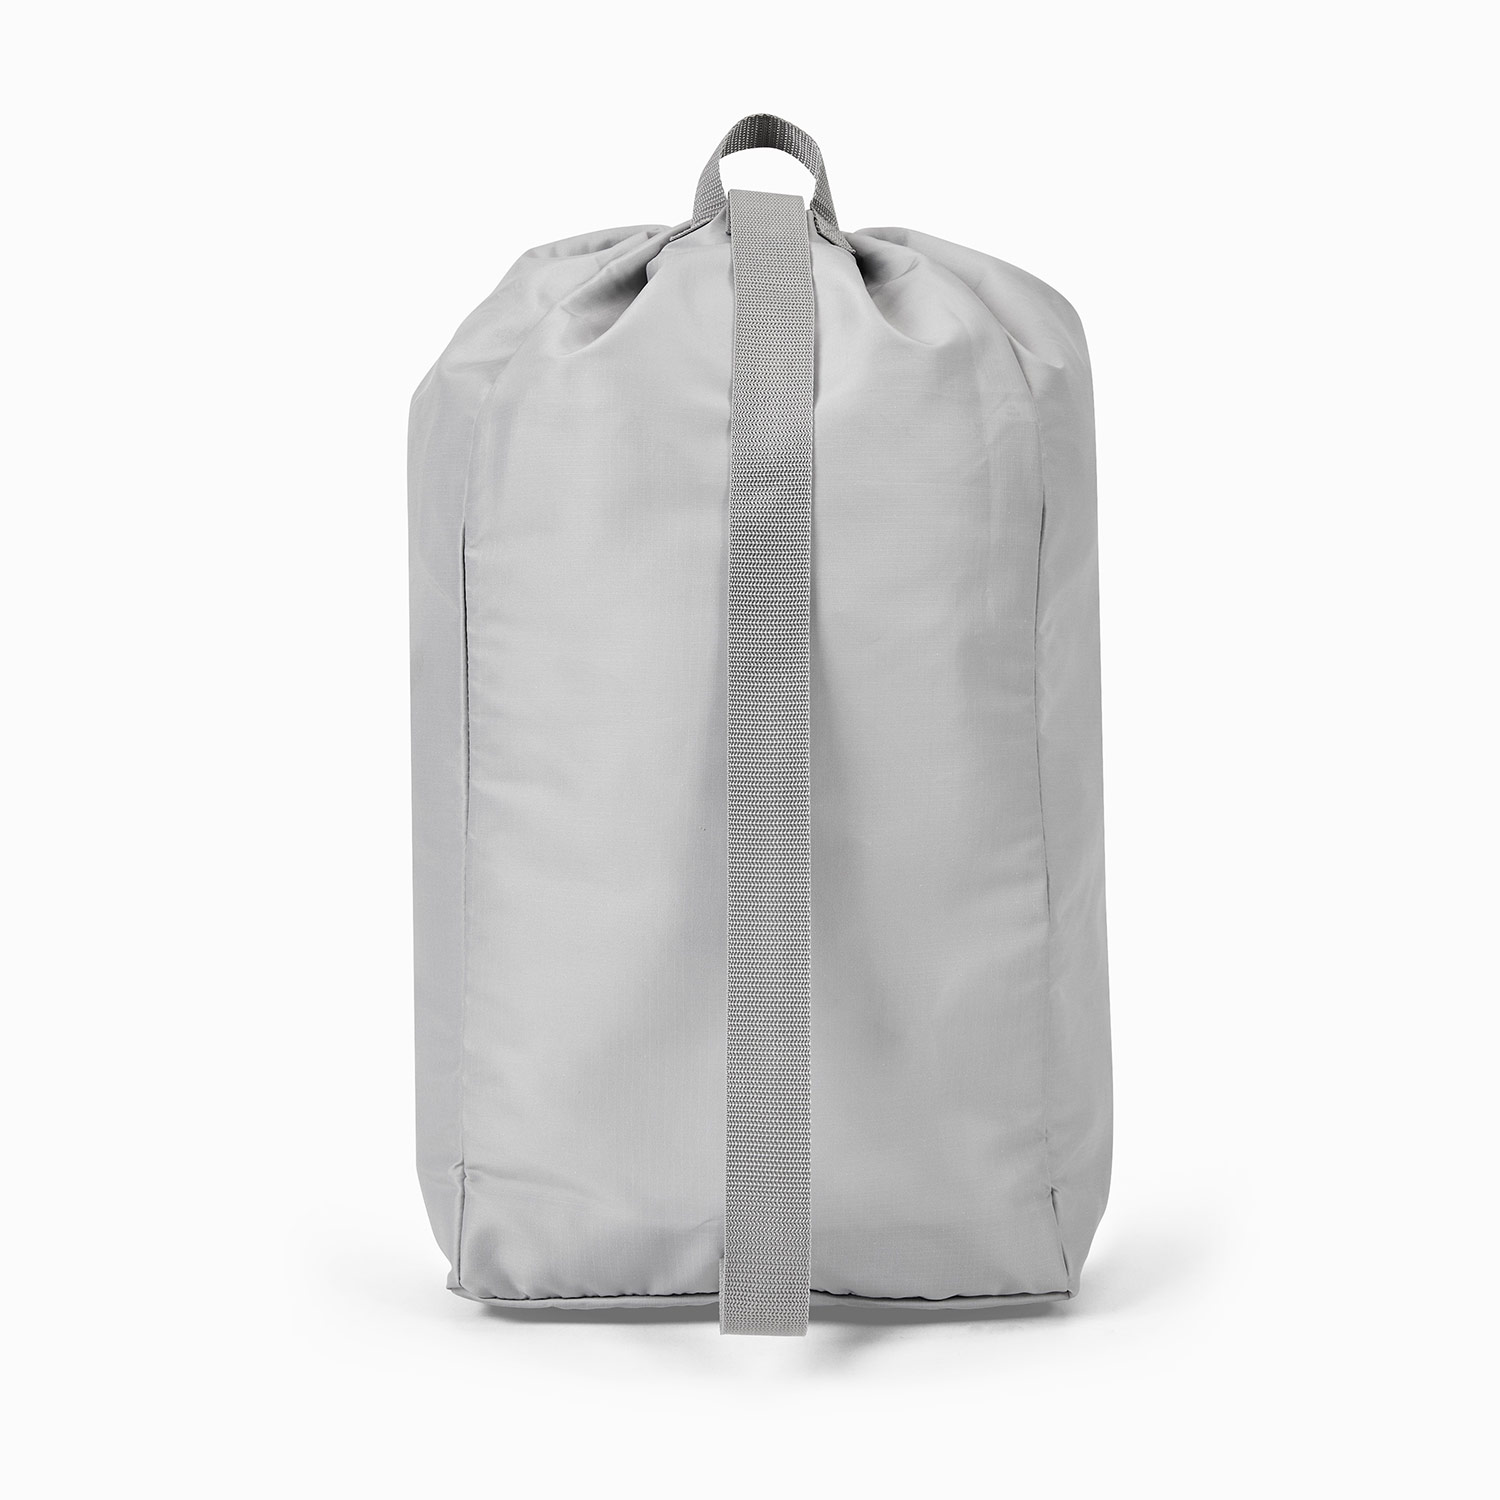 Drawstring Linen Laundry Bag in Light gray